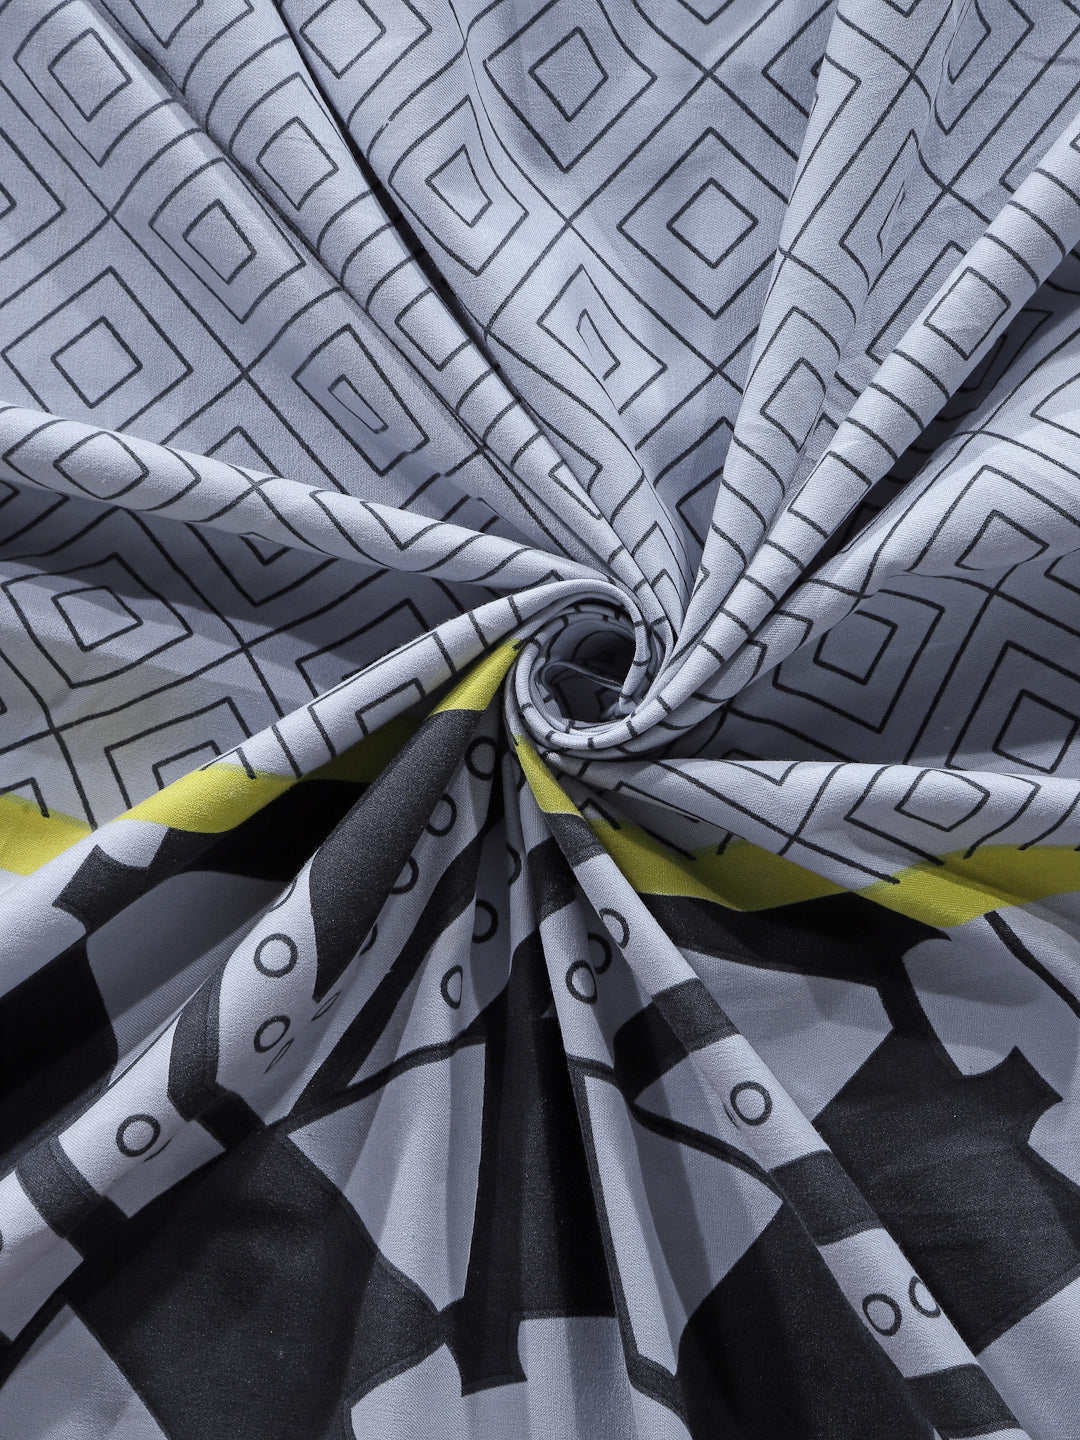 Arrabi Multi Geometric TC Cotton Blend Double King Size Bedsheet with 2 Pillow Covers